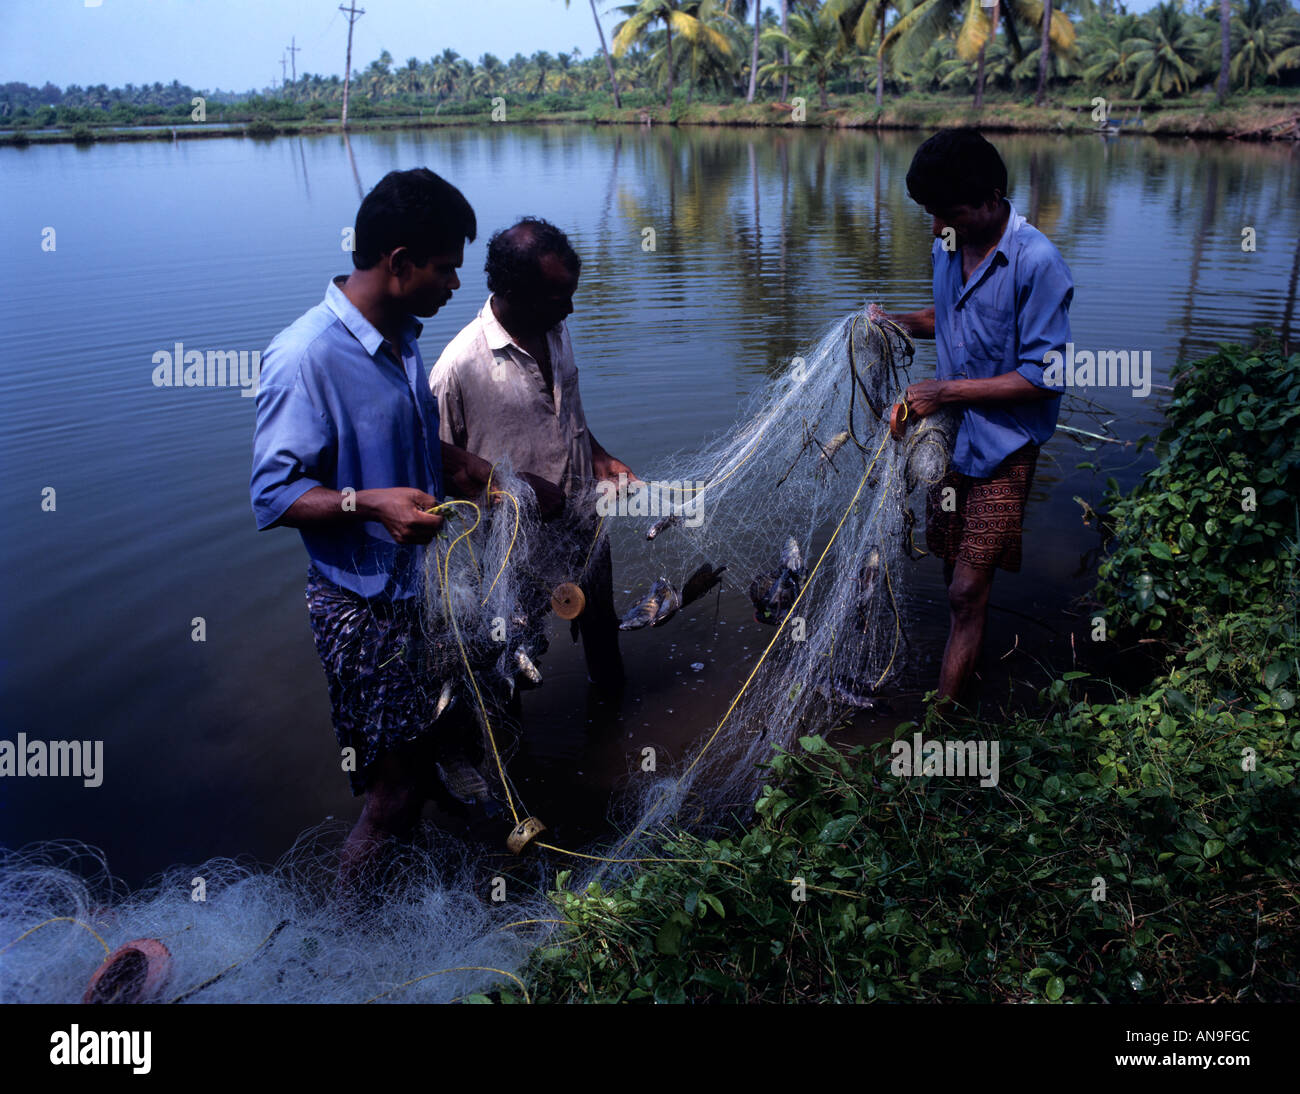 TRADITIONAL FISHING IN KUMBALANGI Stock Photo - Alamy